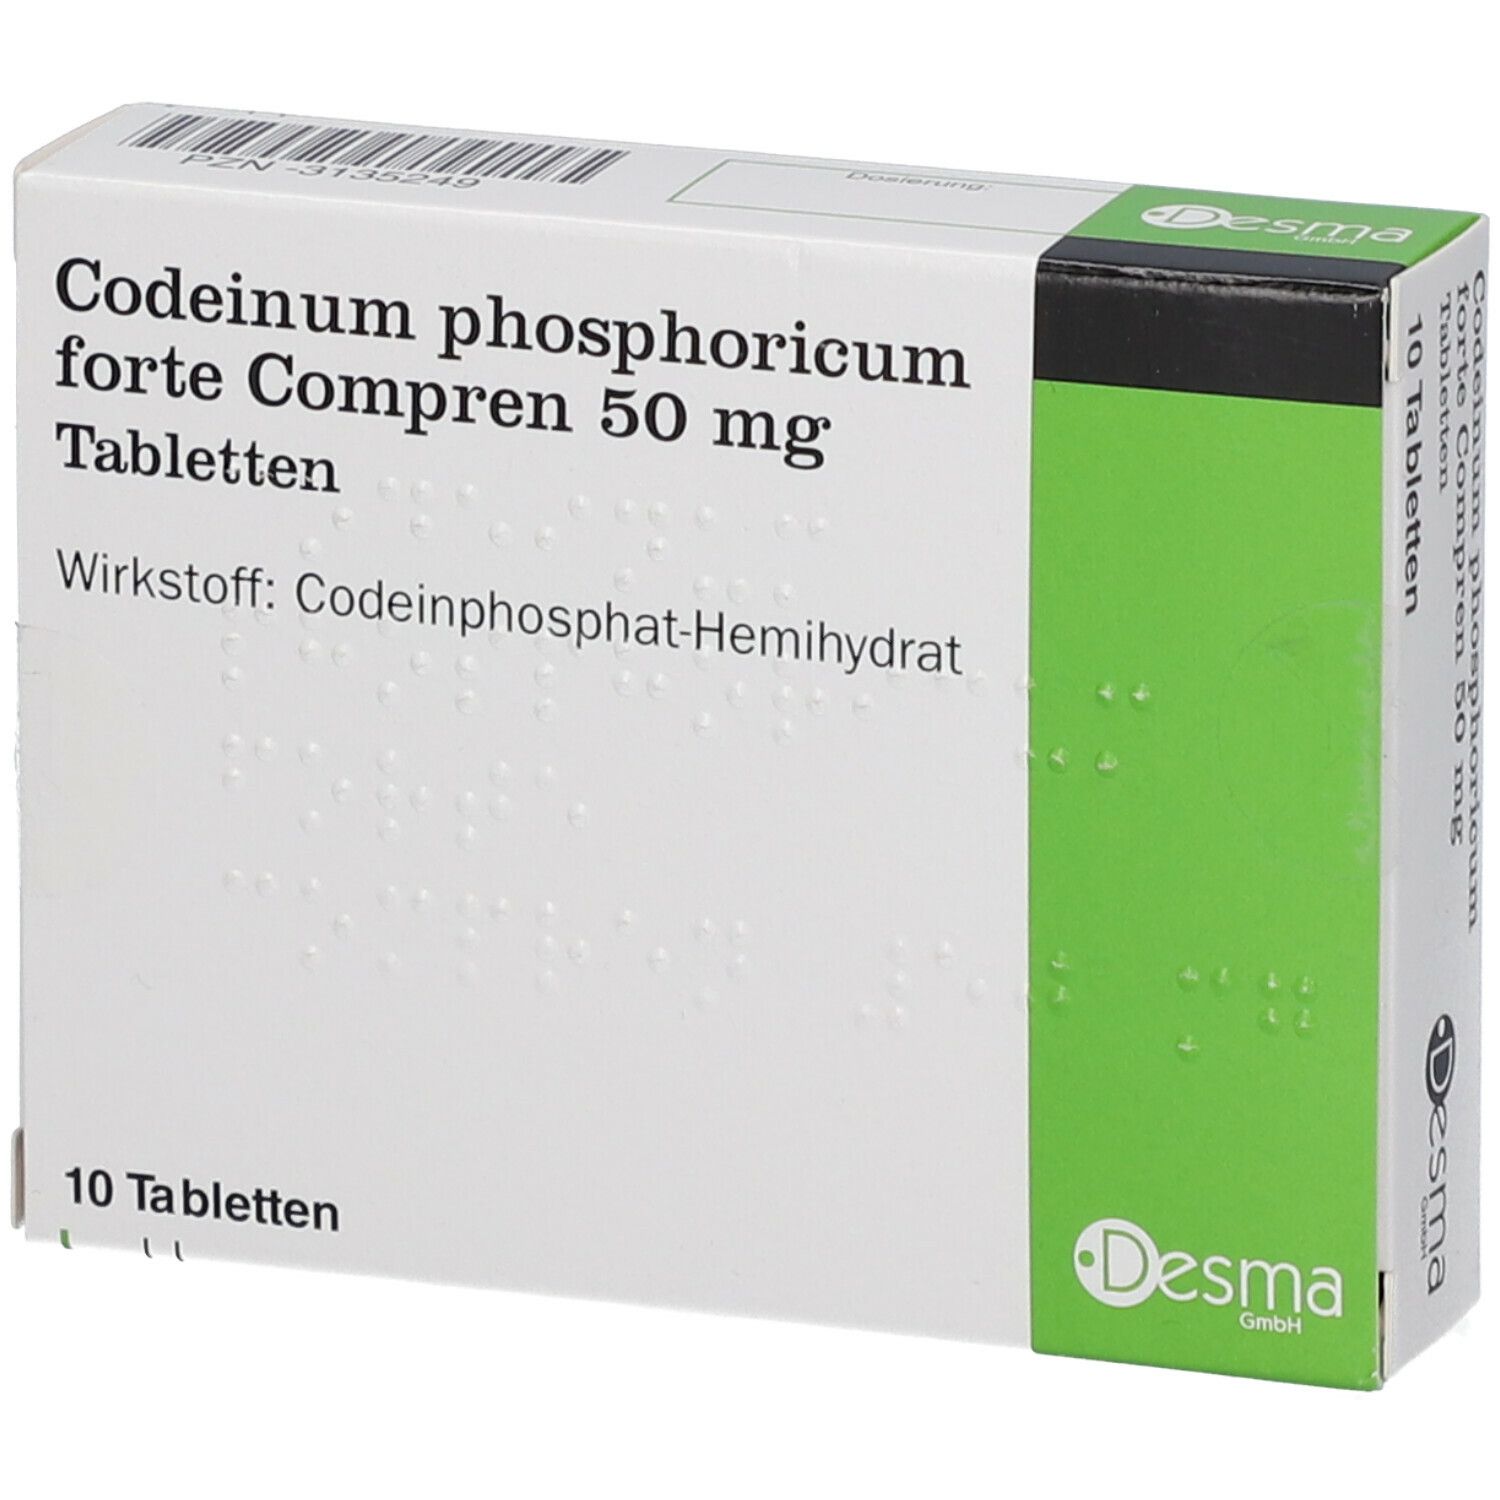 Codeinum phosphoricum forte Compren 50 mg